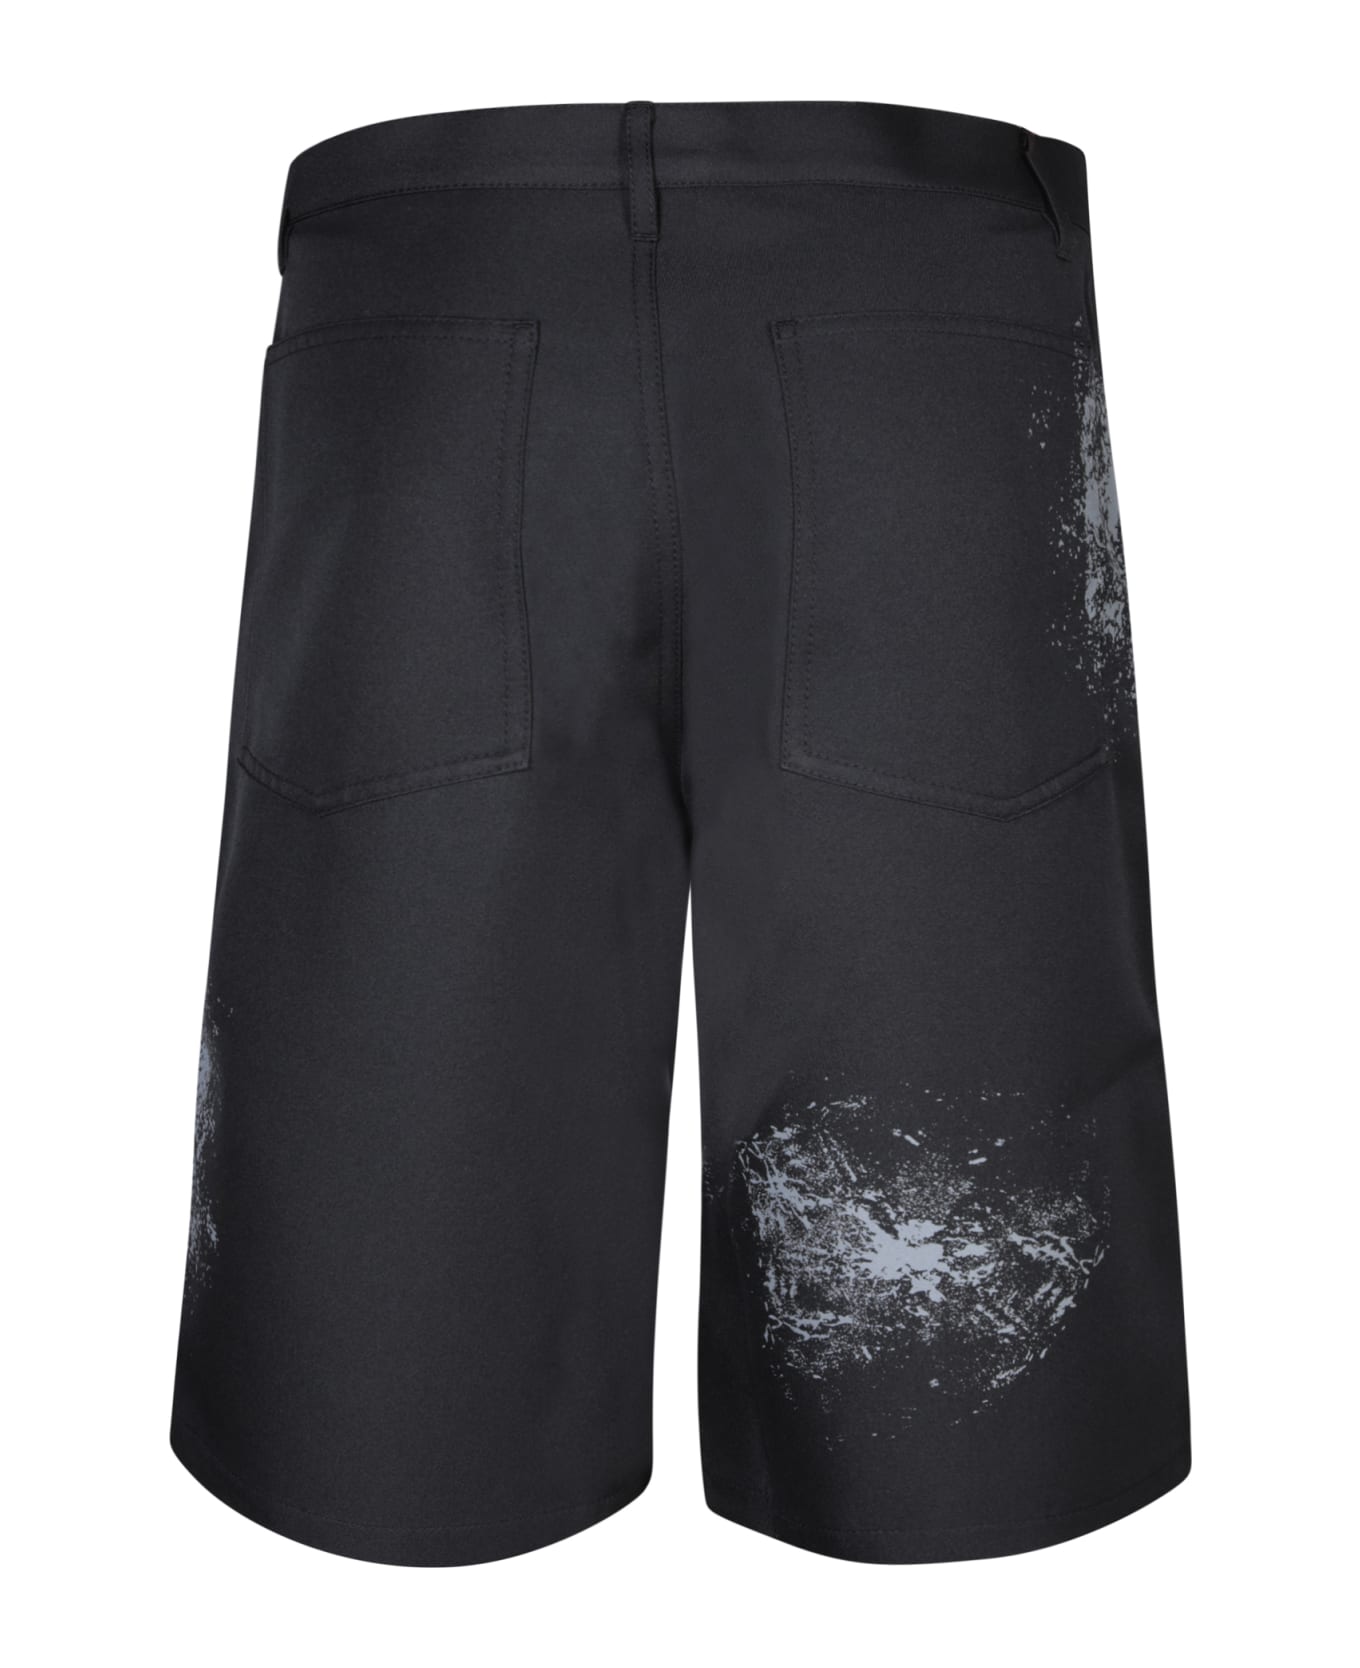 Comme des Garçons Shirt Hand Print Black Bermuda Shorts - Black